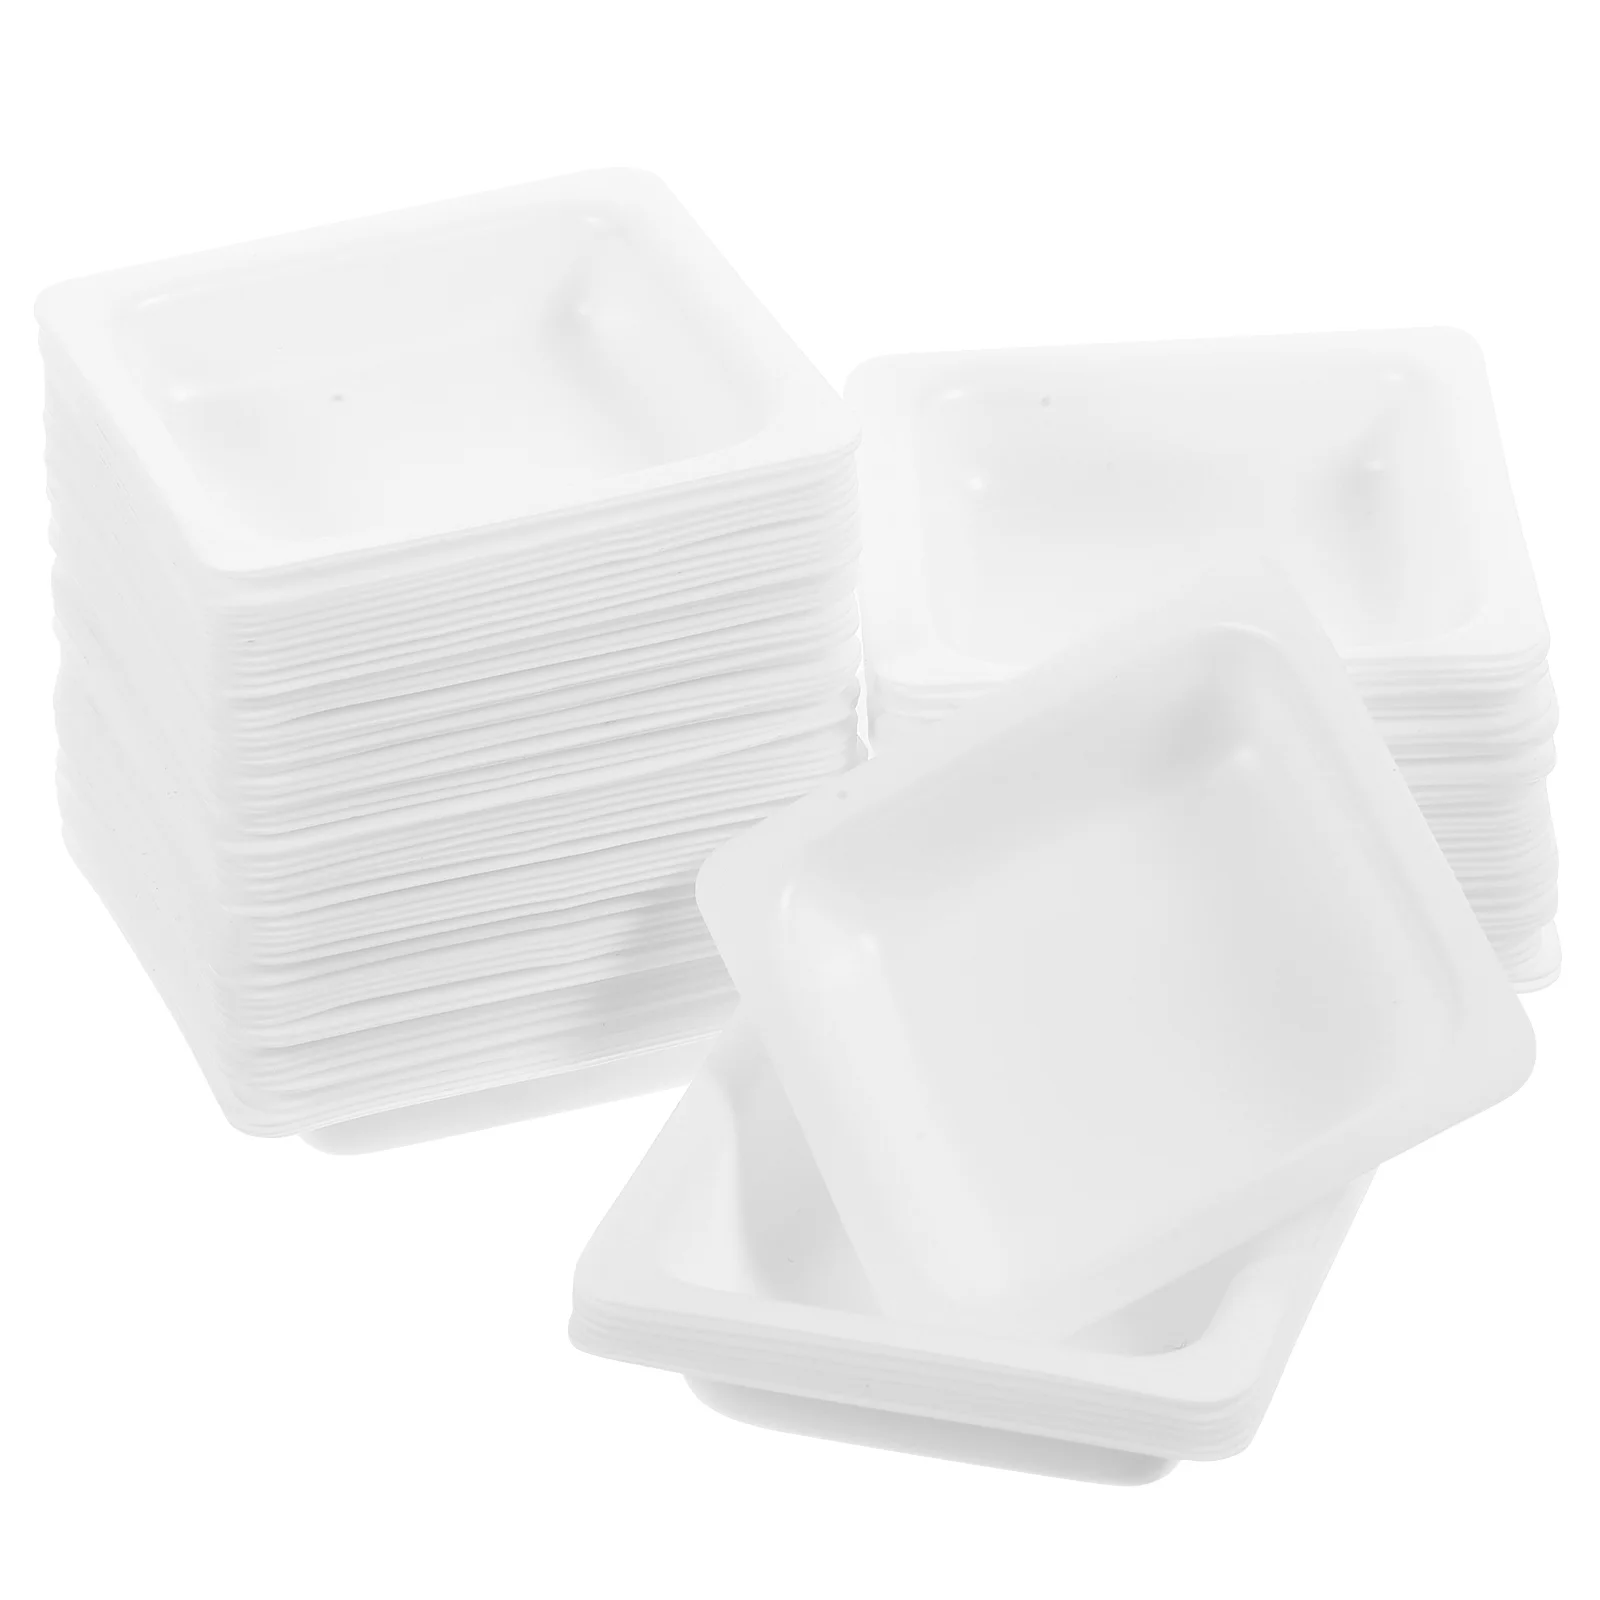 

100 Pcs Weighing Dish Plates Aluminum Foil Square Lab Equipment Reusable Pans Trays Plastic Sample